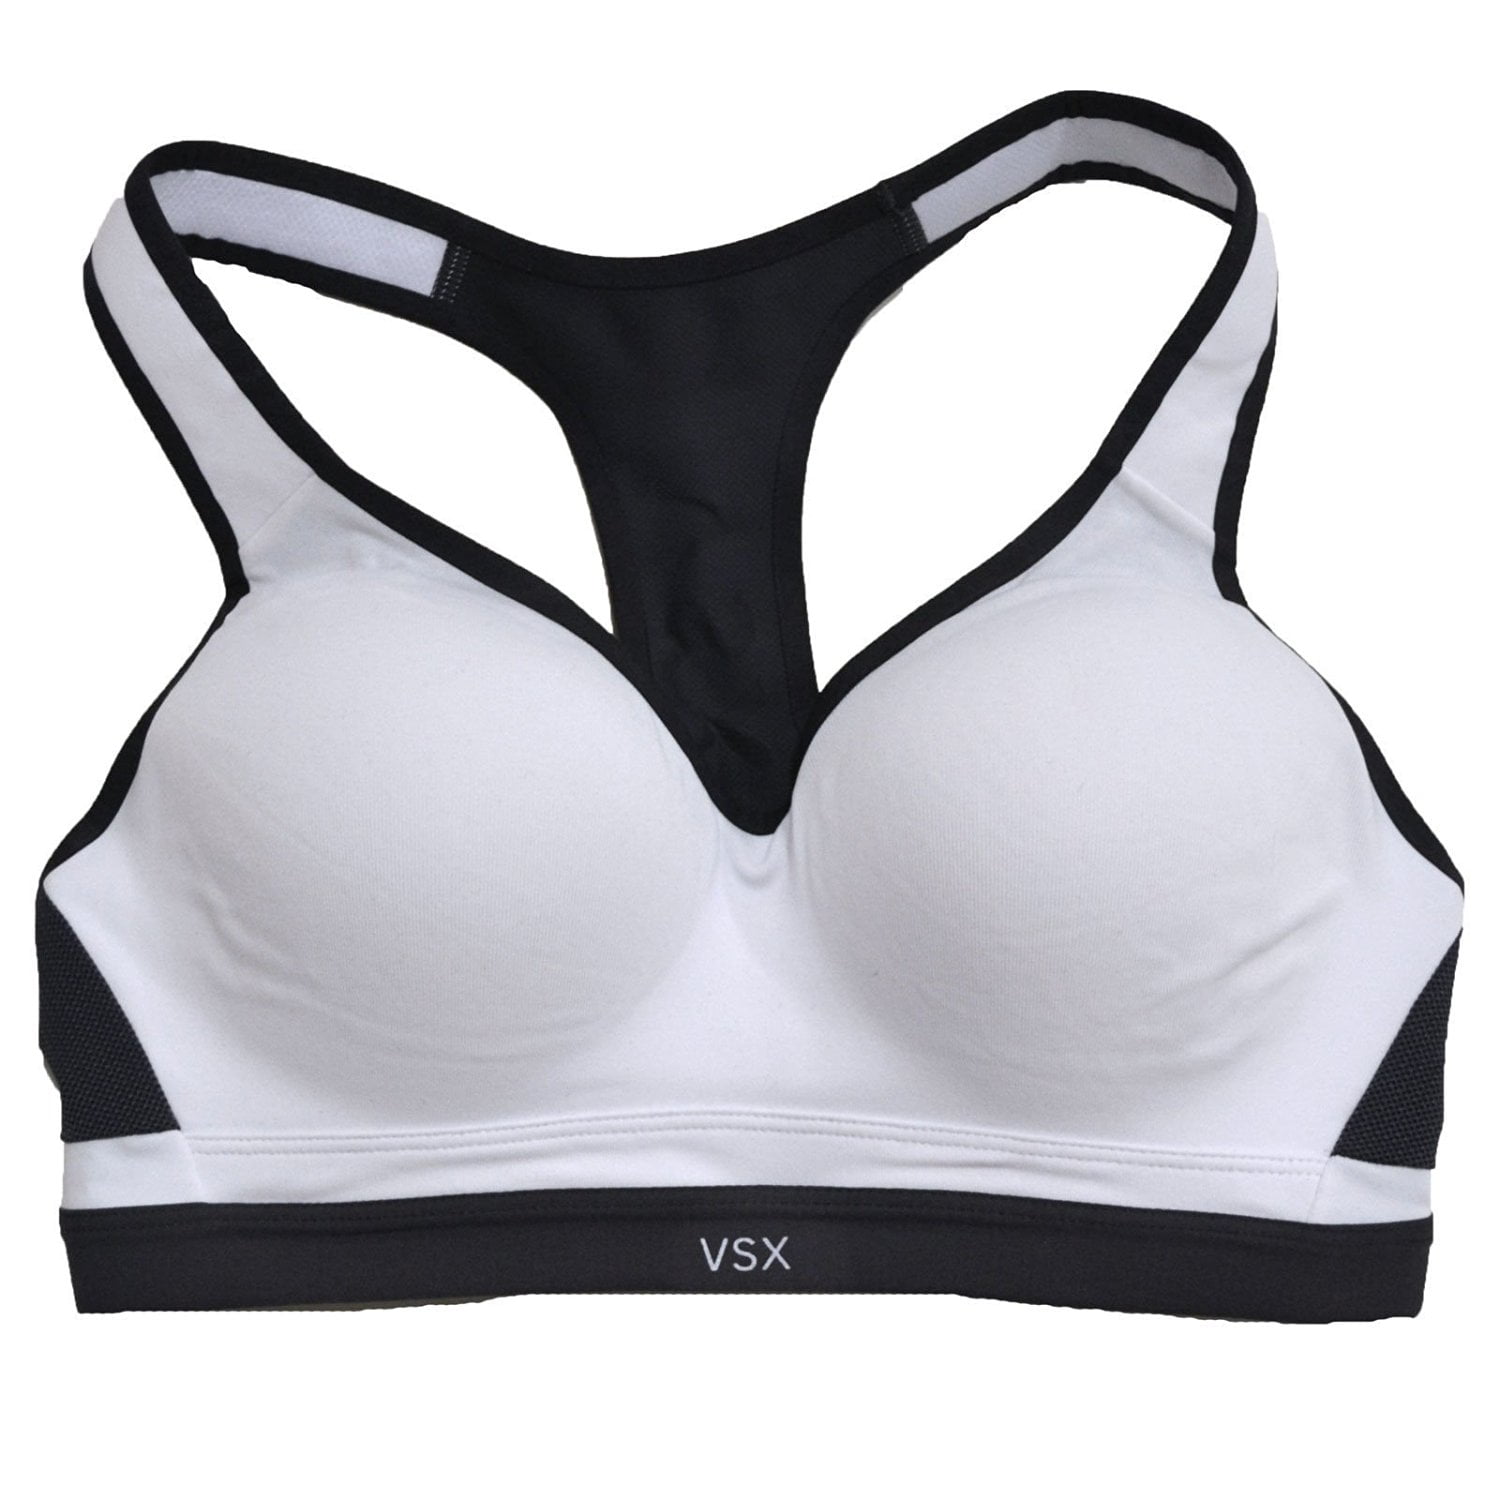 Victoria's Secret Vsx _36dd Gray And Black Sports Bra… - Gem